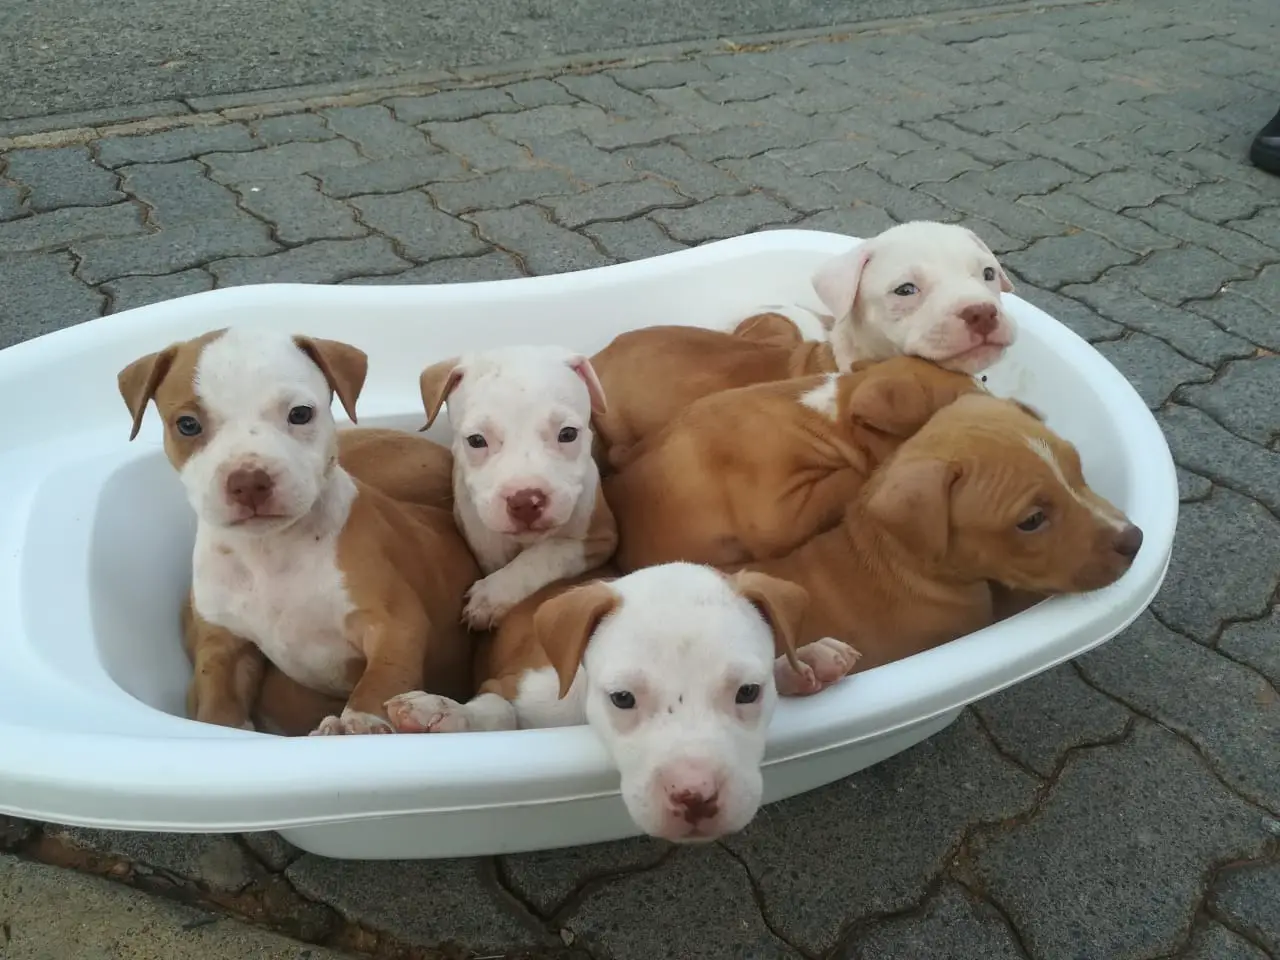 Pitbull Puppies in Johannesburg (12/01/2022)